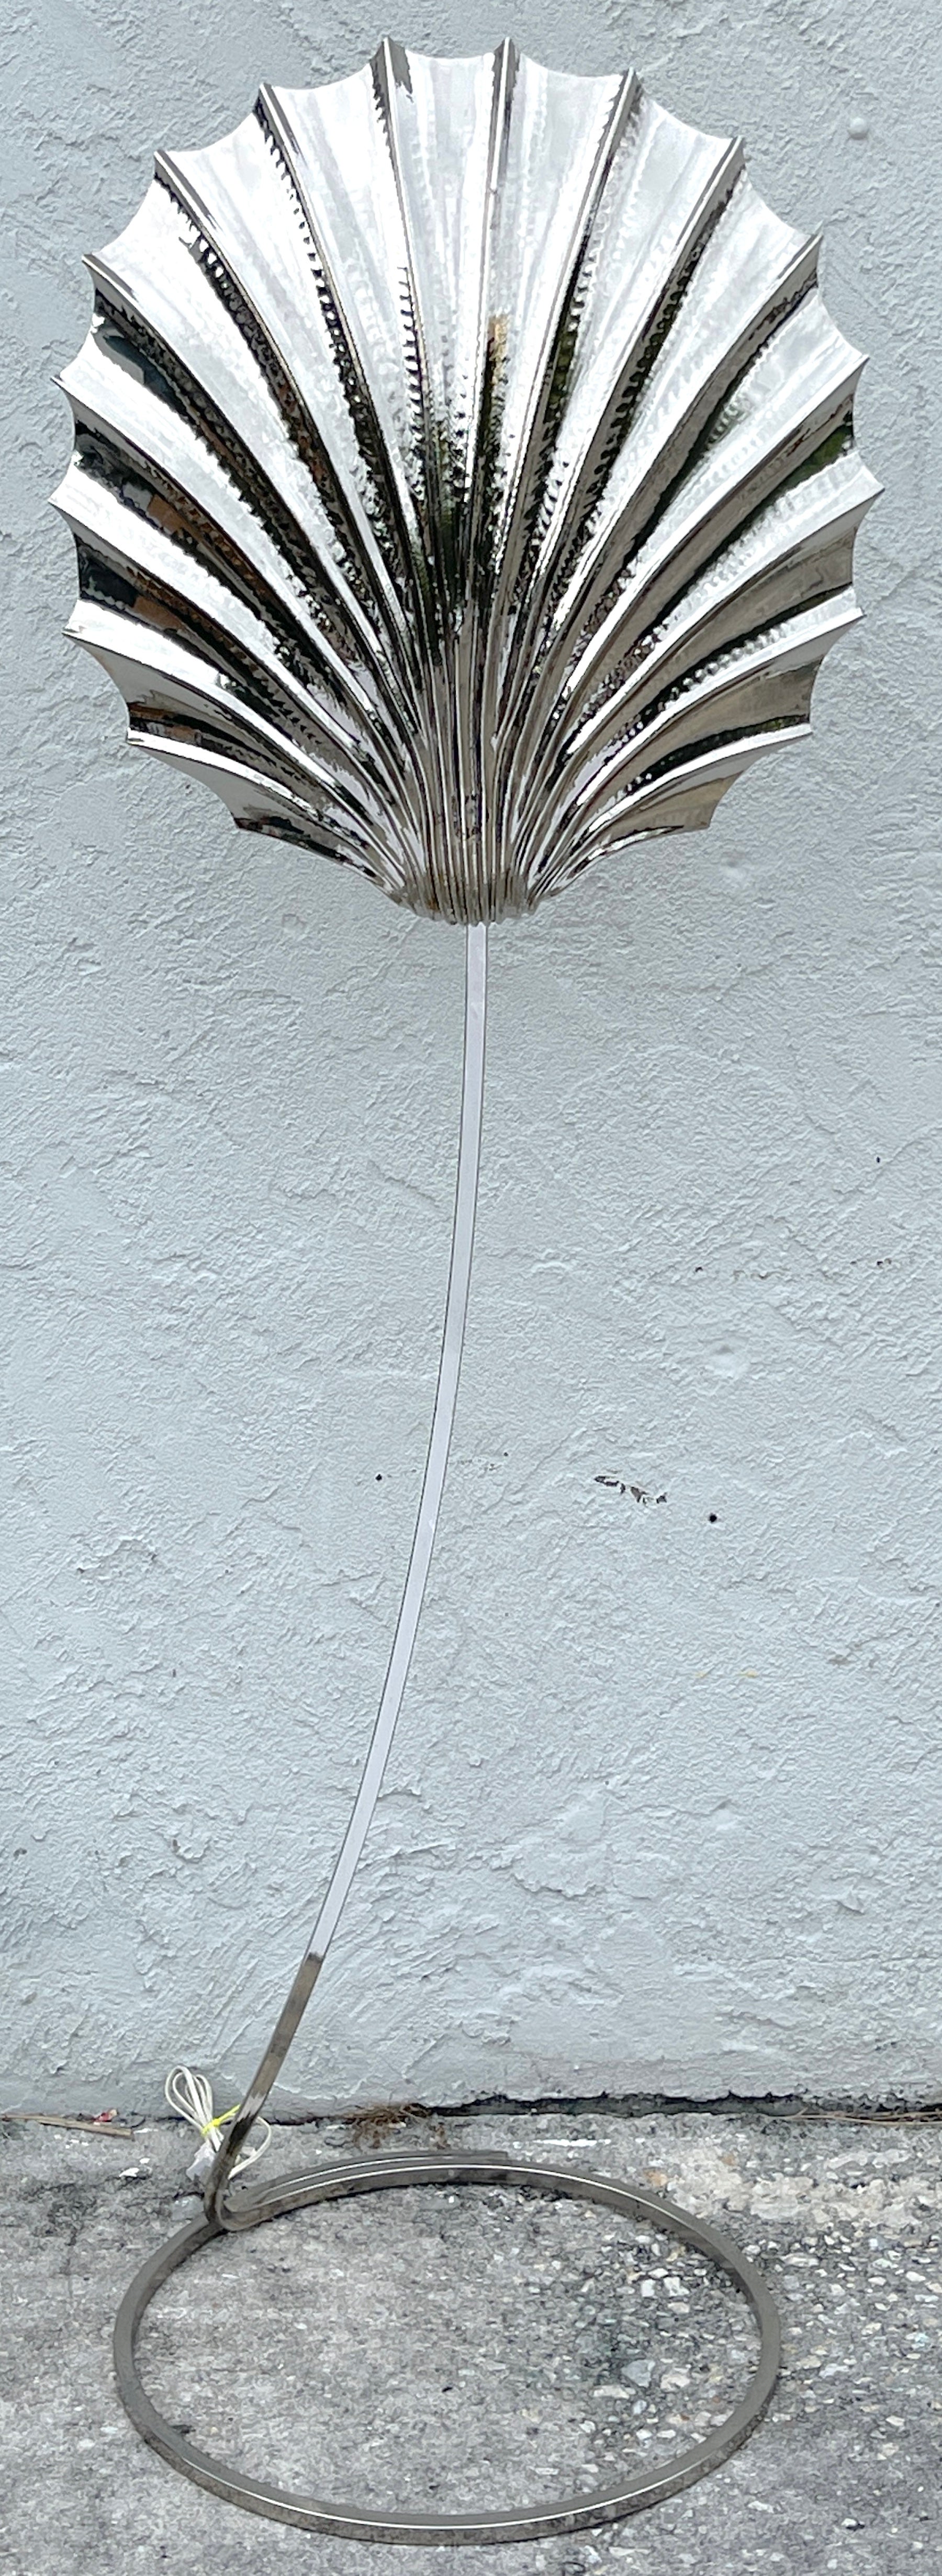 Tommaso Barbi 'Conchiglia' (Shell)  Floor Lamp, c. 1970
(Italian, 20th Century) Bottega Gadda, Italy

An uncommon masterwork from the Italian designer Tommaso Barbi, the 'Conchiglia' (Shell) Floor Lamp, crafted circa 1970 by Bottega Gadda.  This